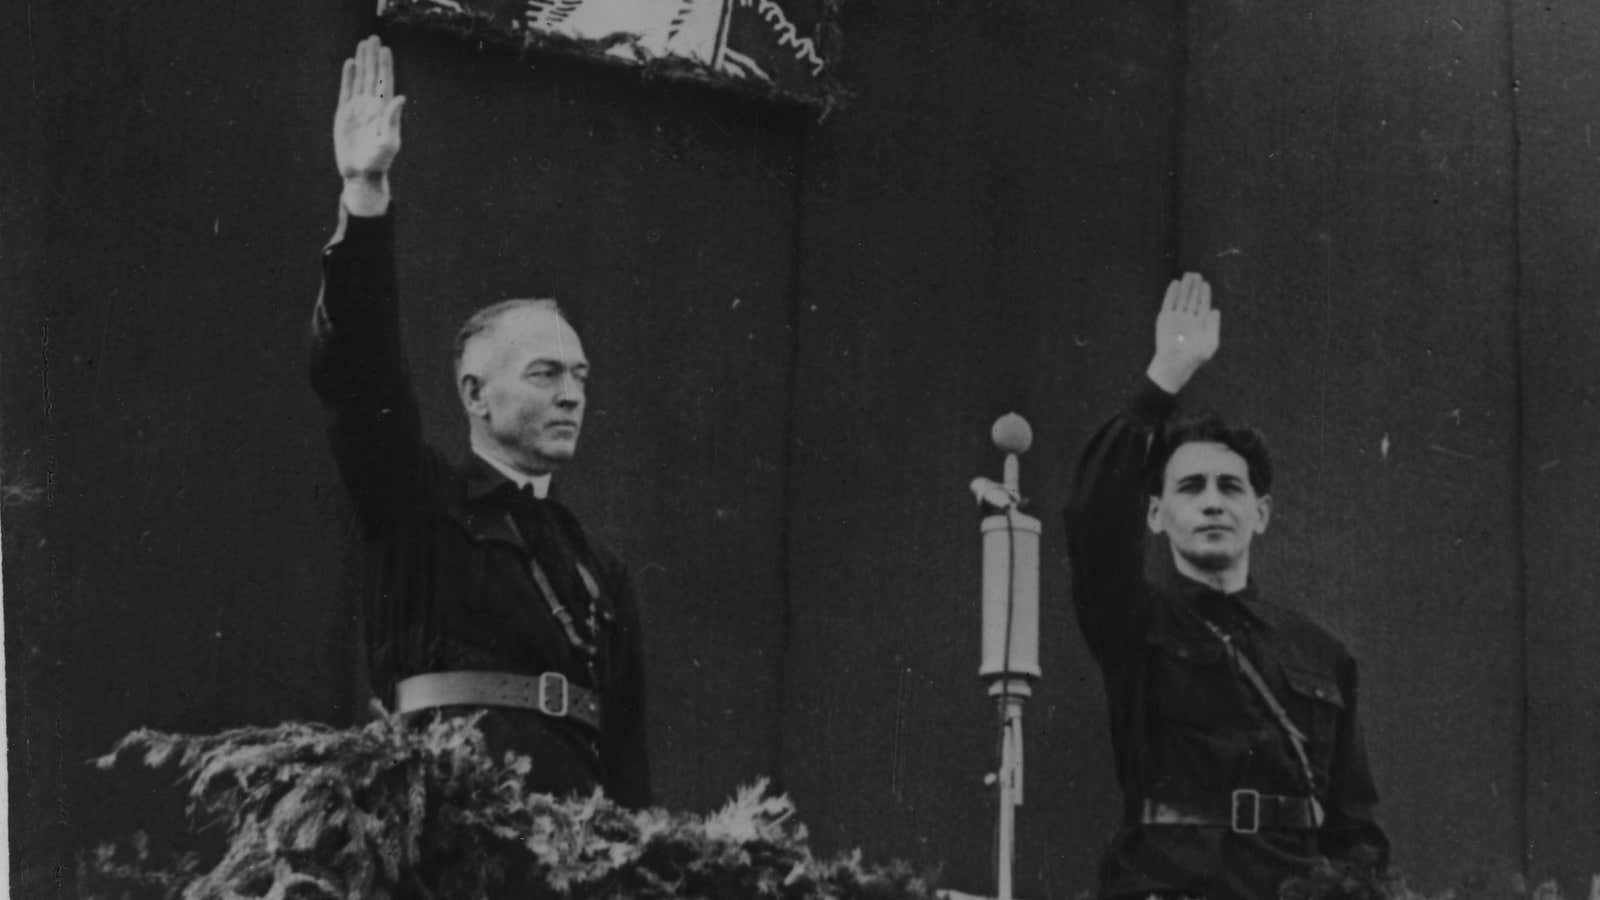 Romanian prime minister Ion Antonescu (left) with Iron Guard leader Horia Sima in 1940.